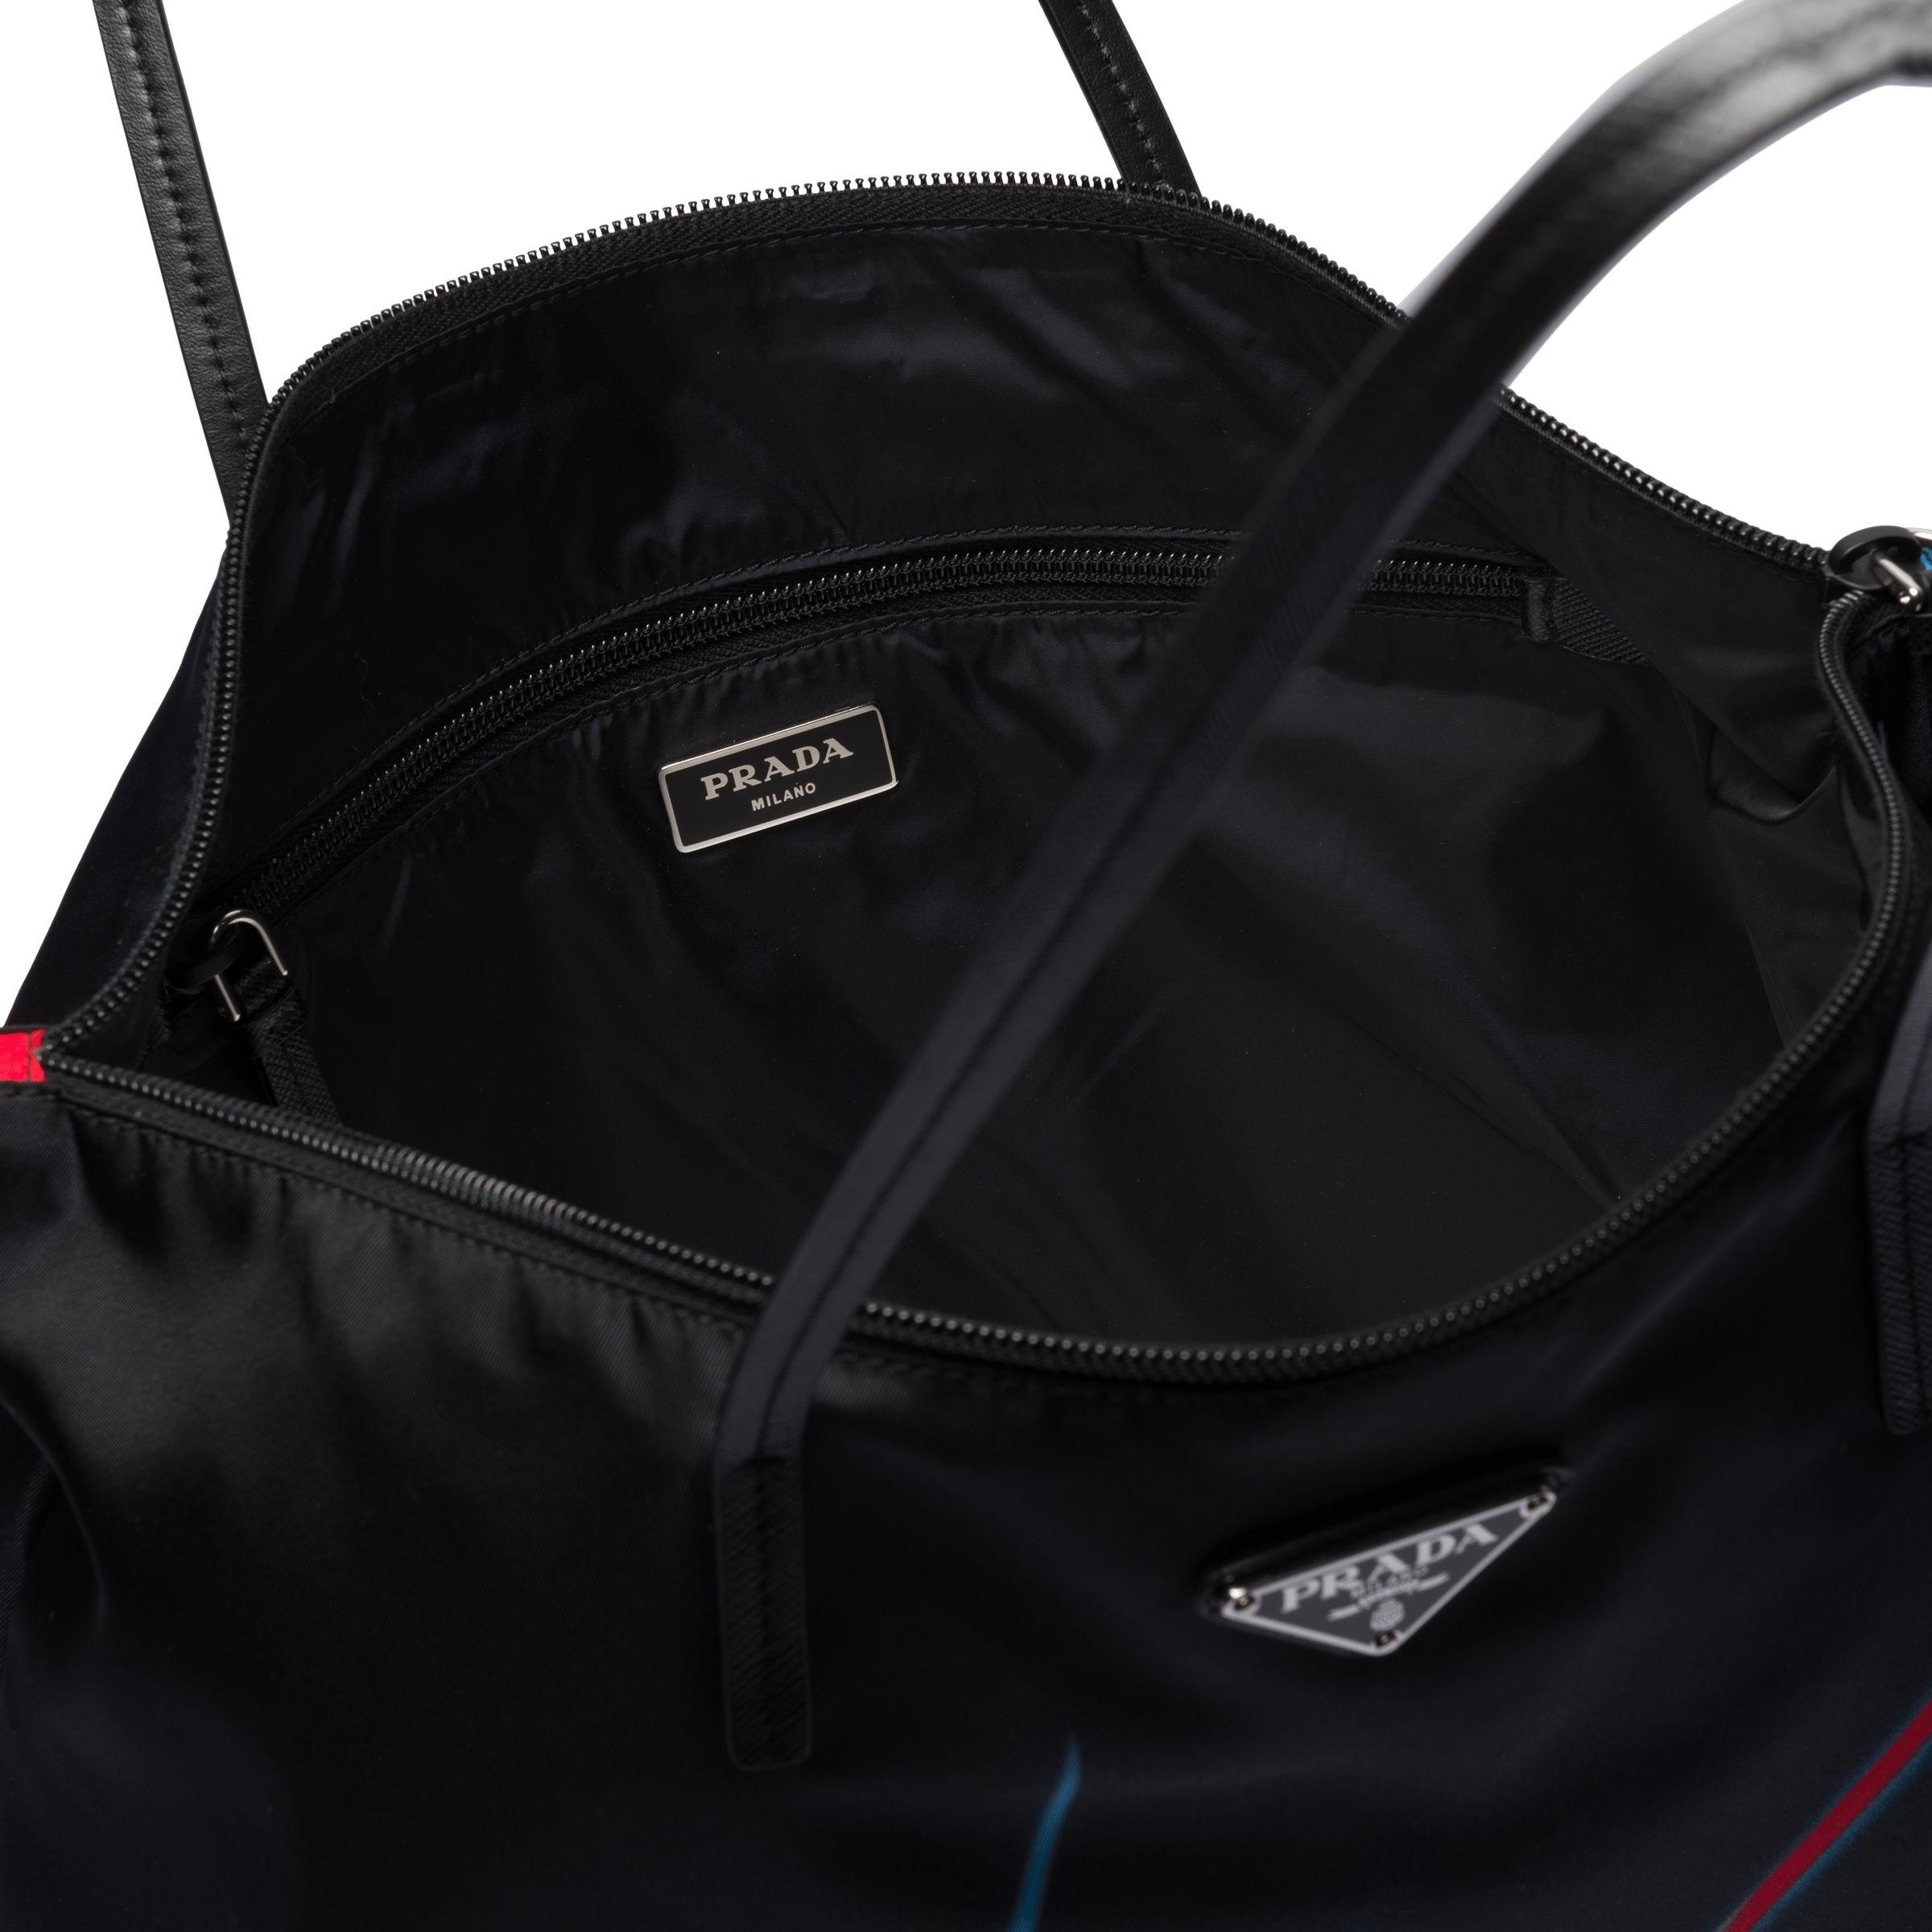 Prada Synthetic Twin Set Tote Bag in Black - Lyst